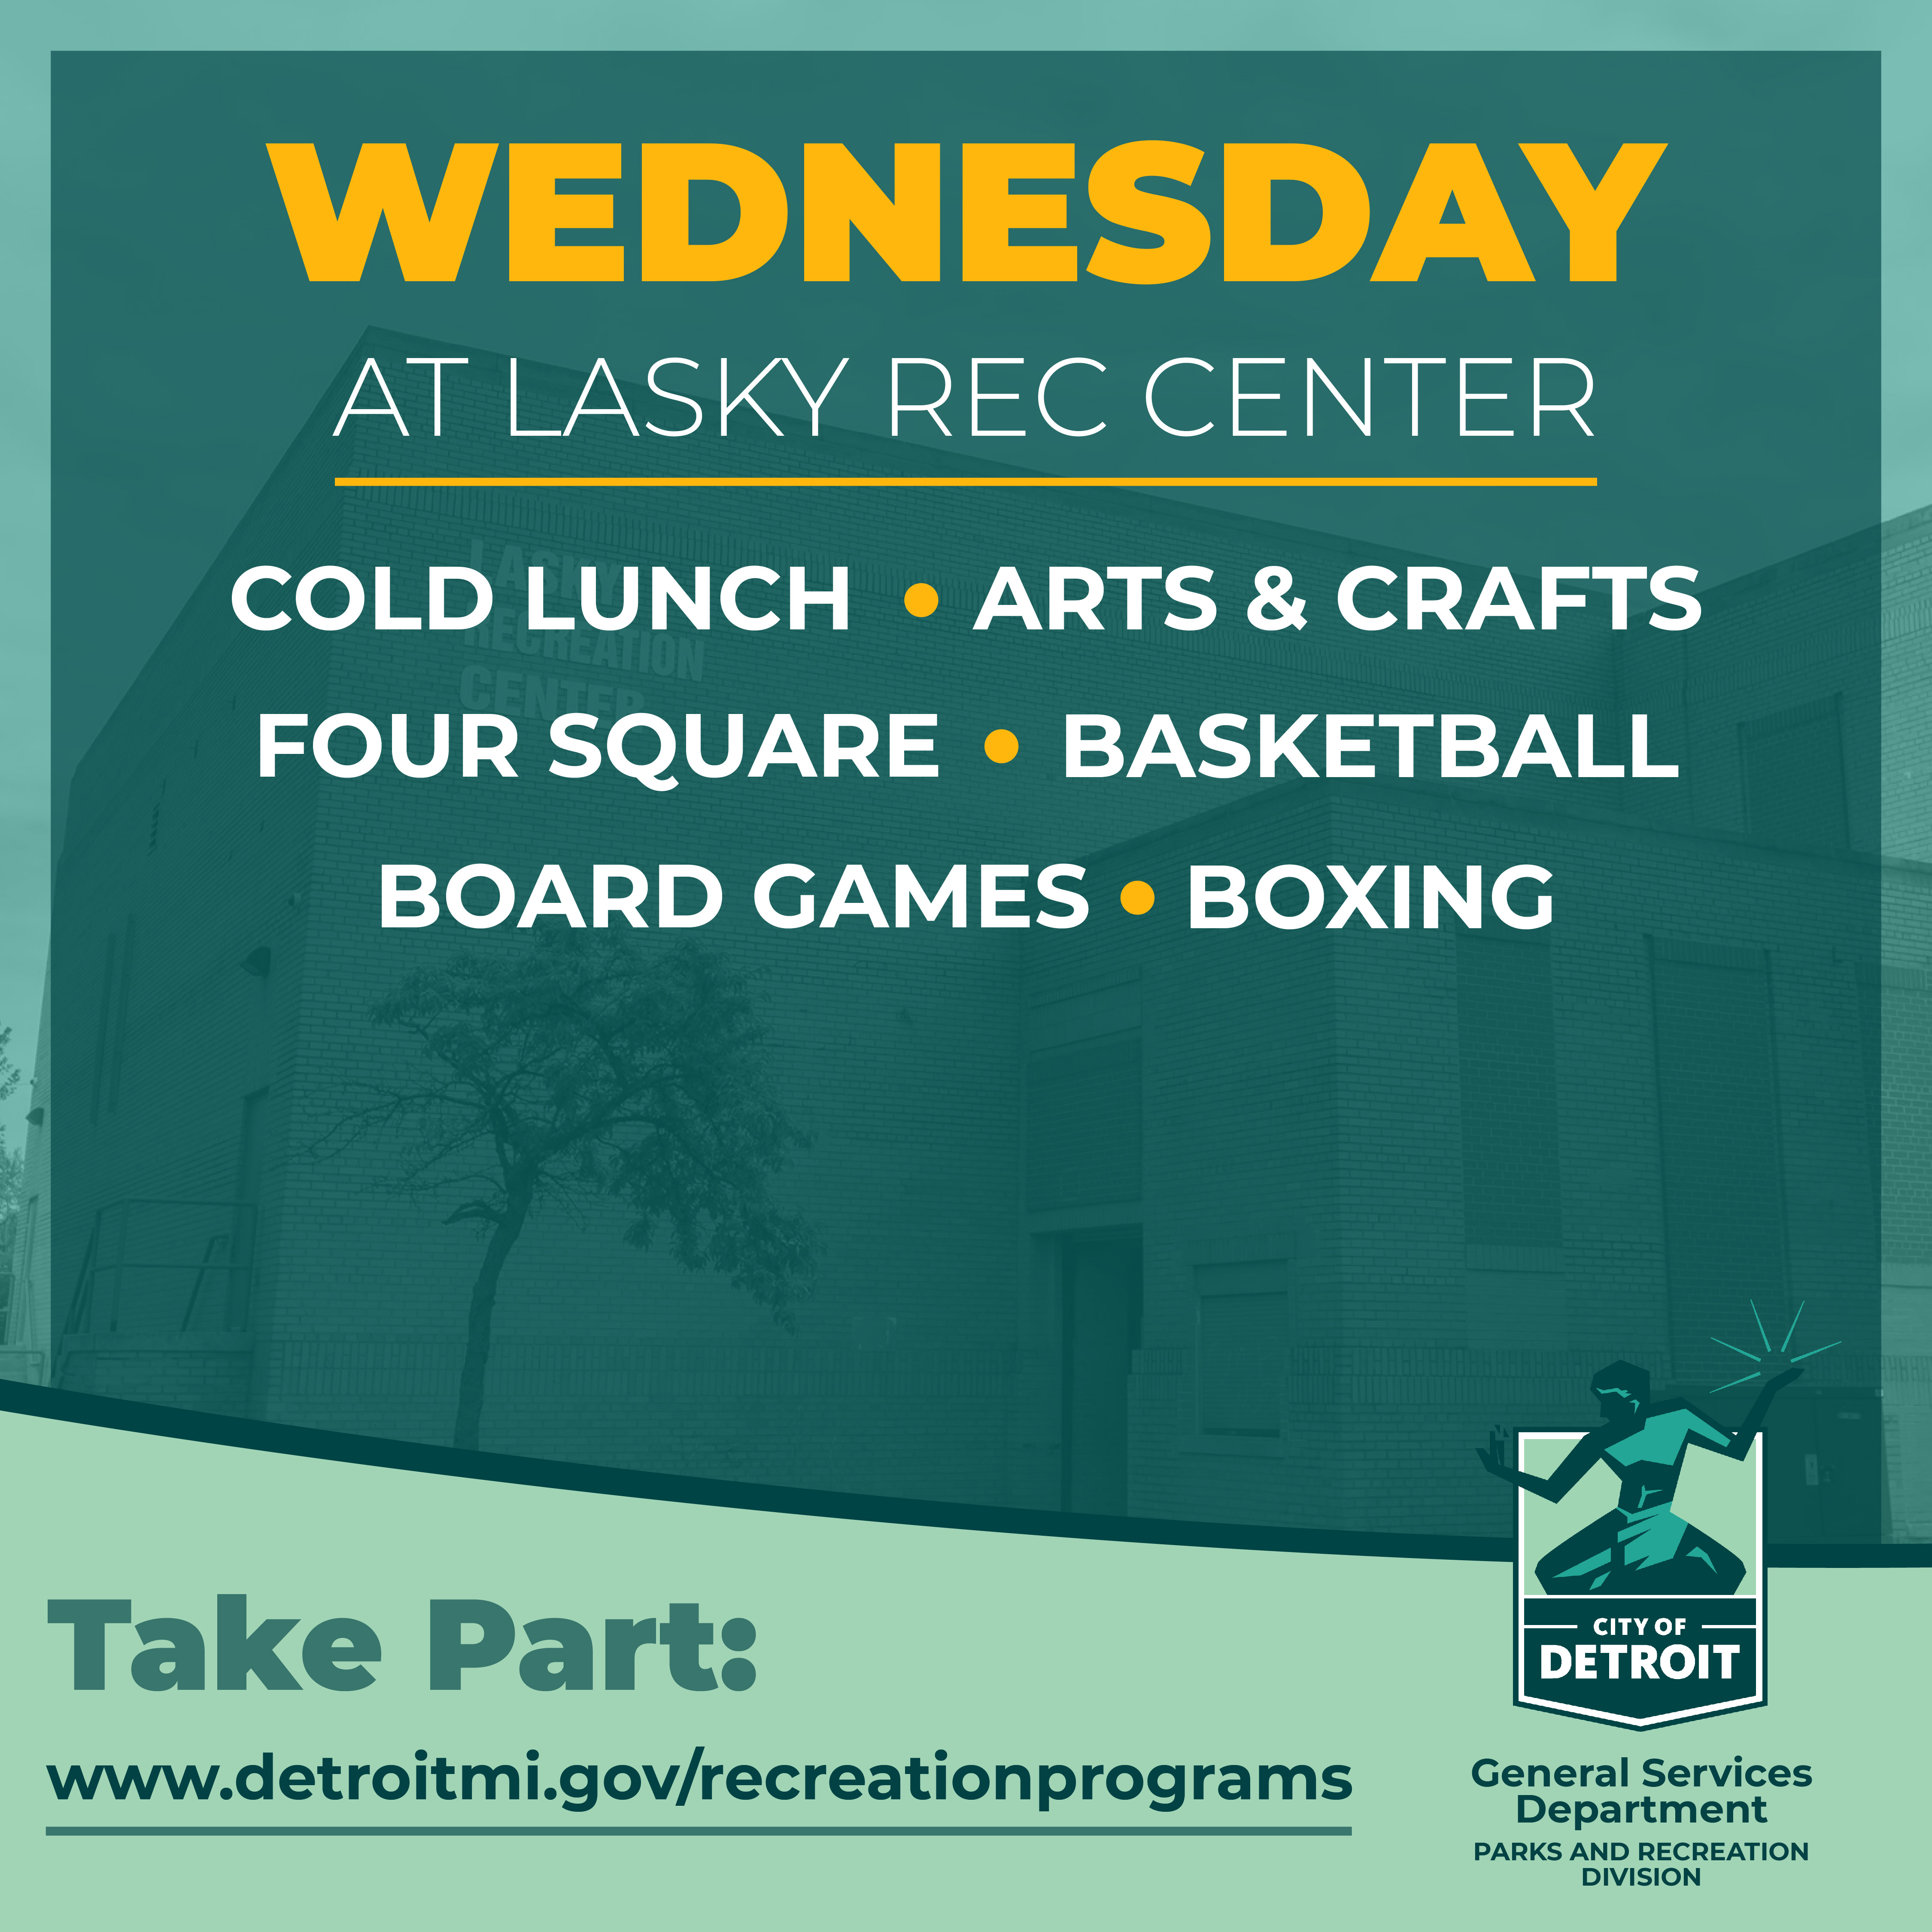 Wednesdays at Lasky